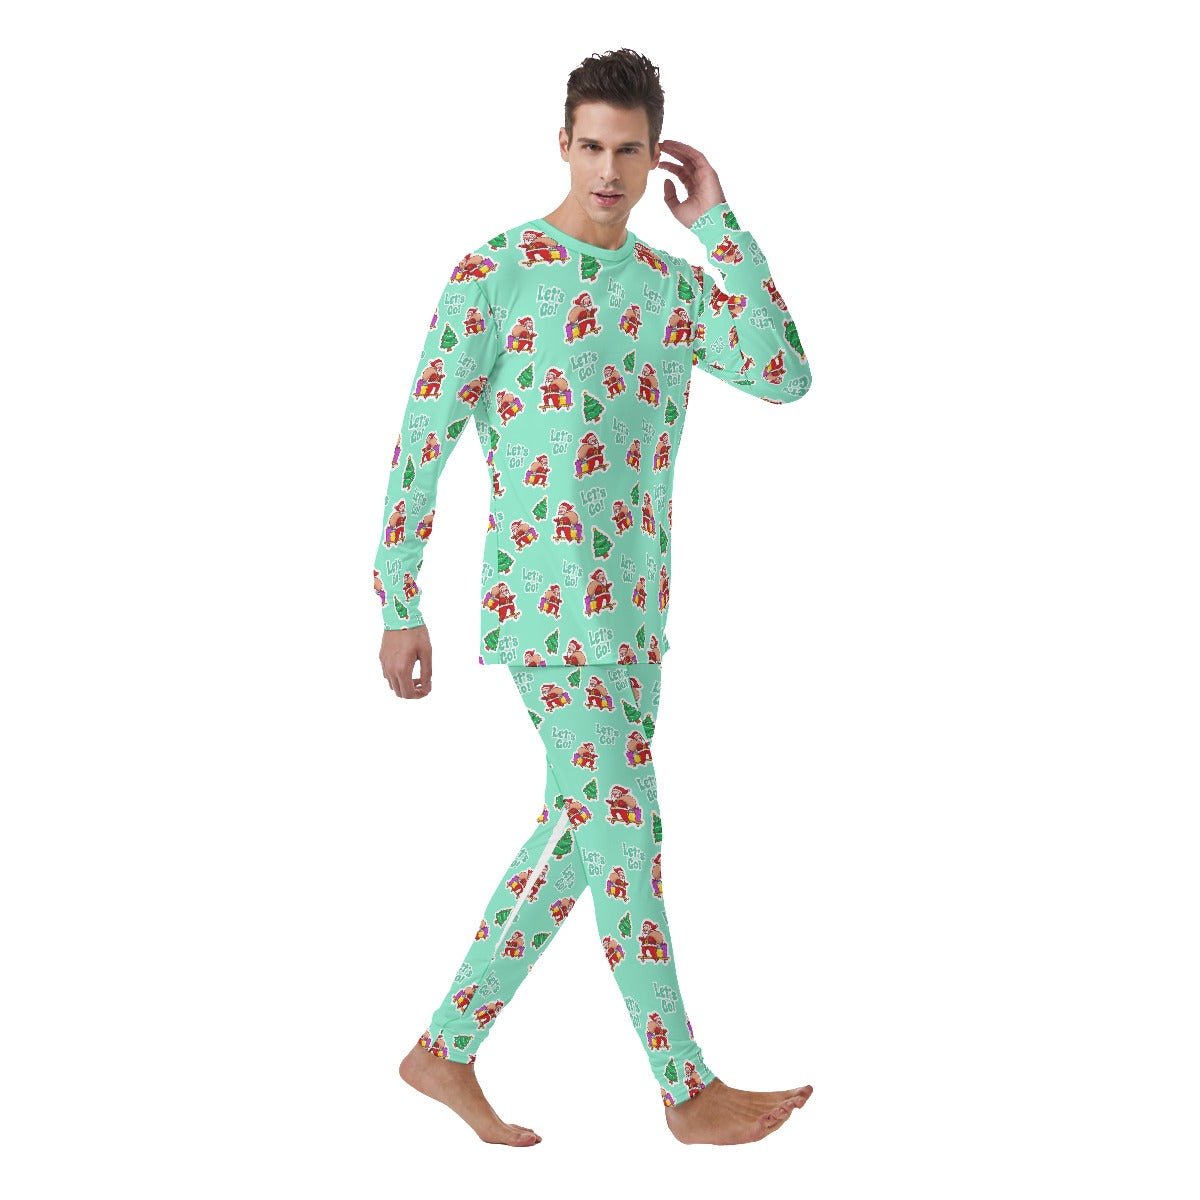 Men's Christmas Pyjamas - Green "Let's Go!" - Festive Style